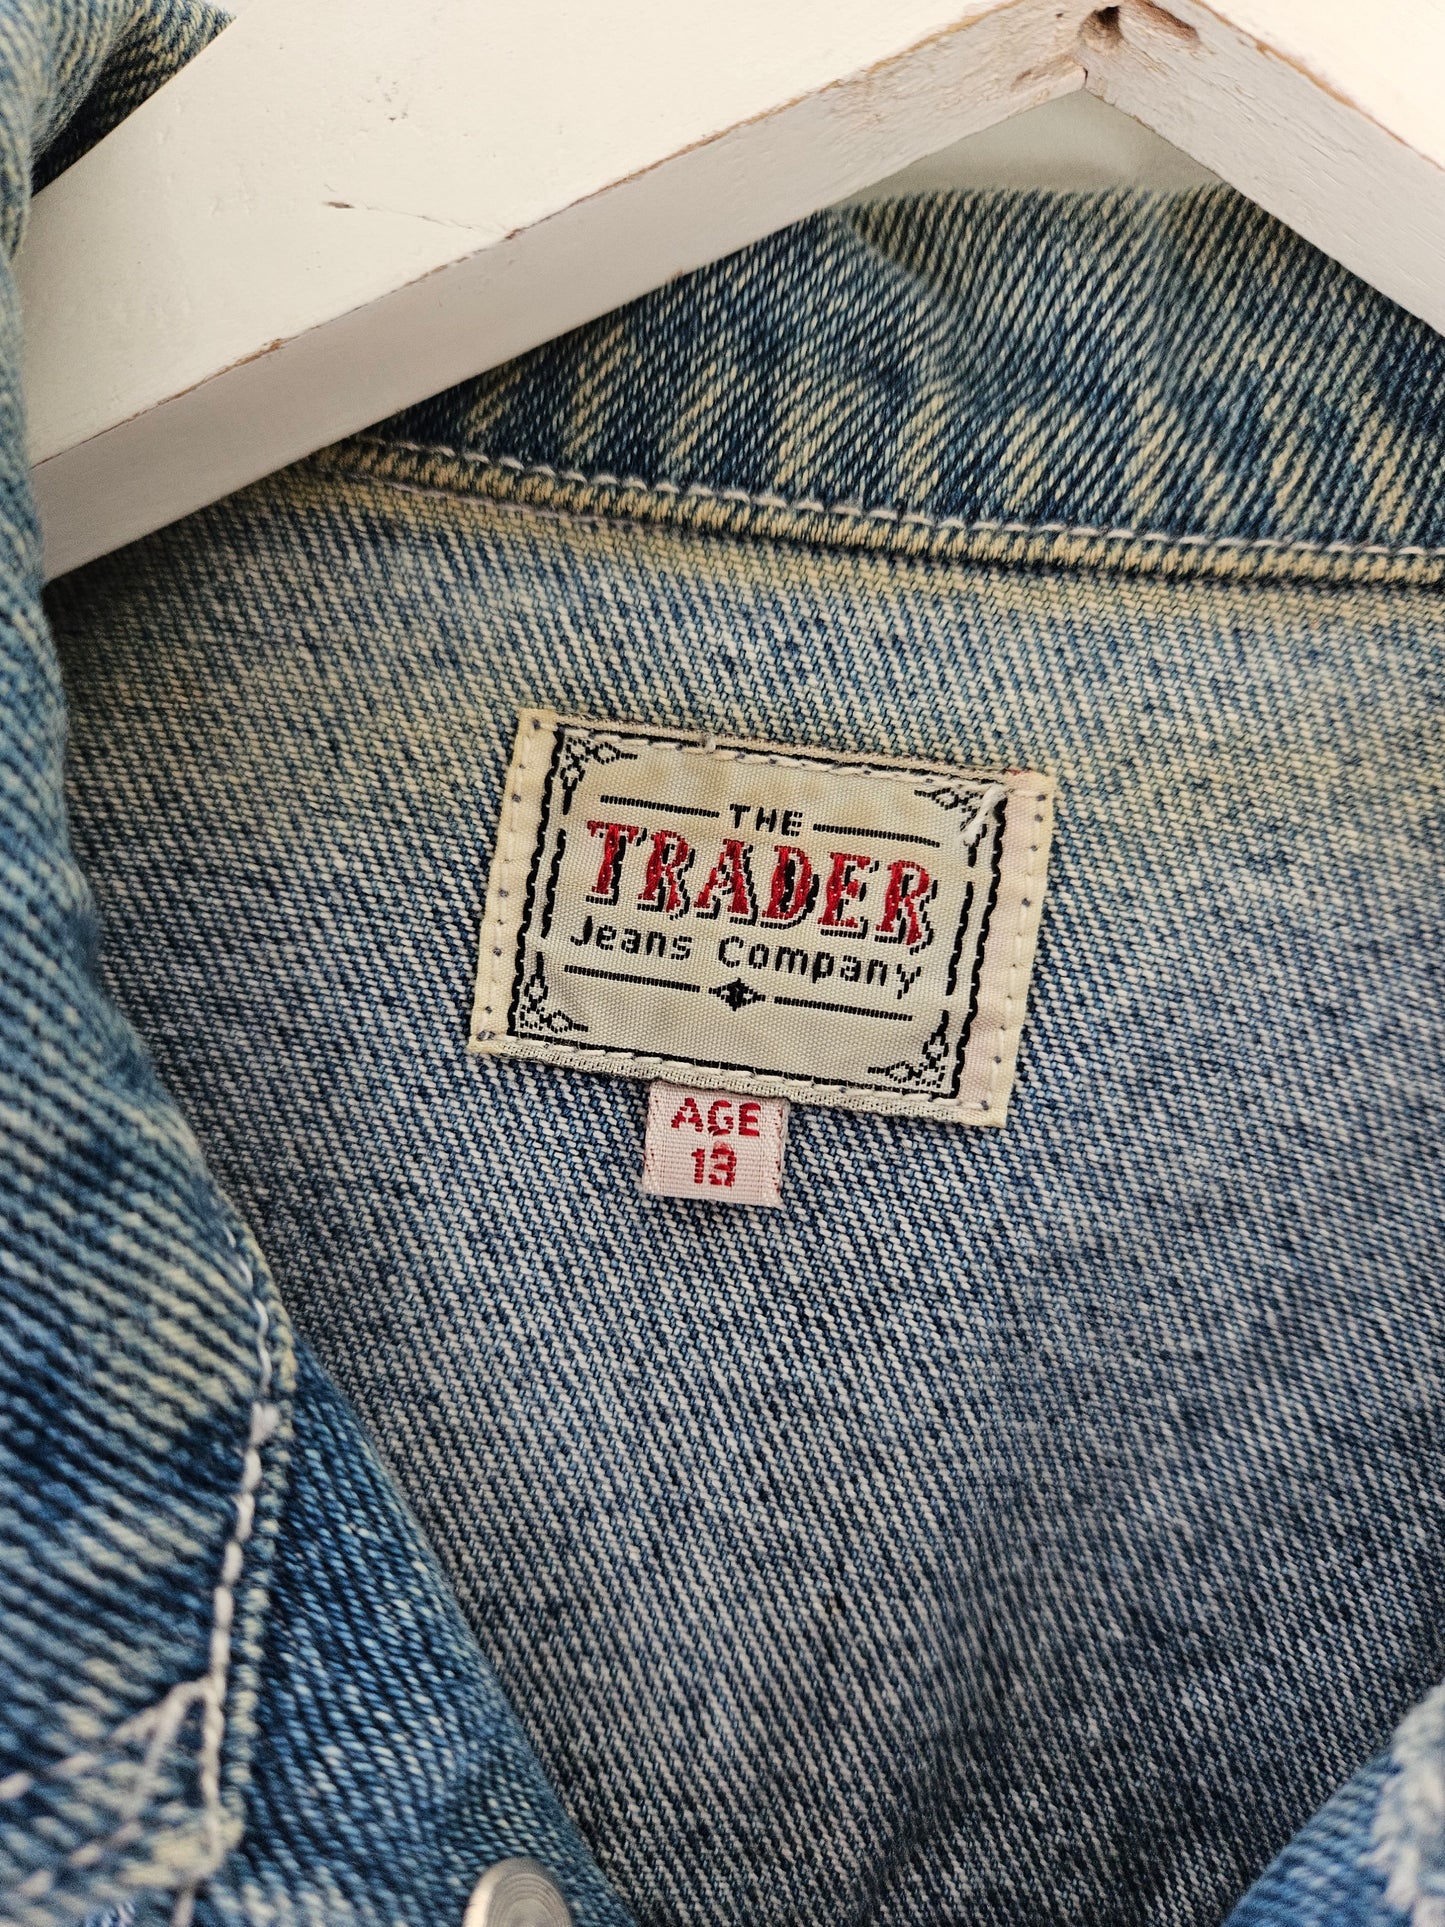 TRADER Jeans Company Denim Jacket